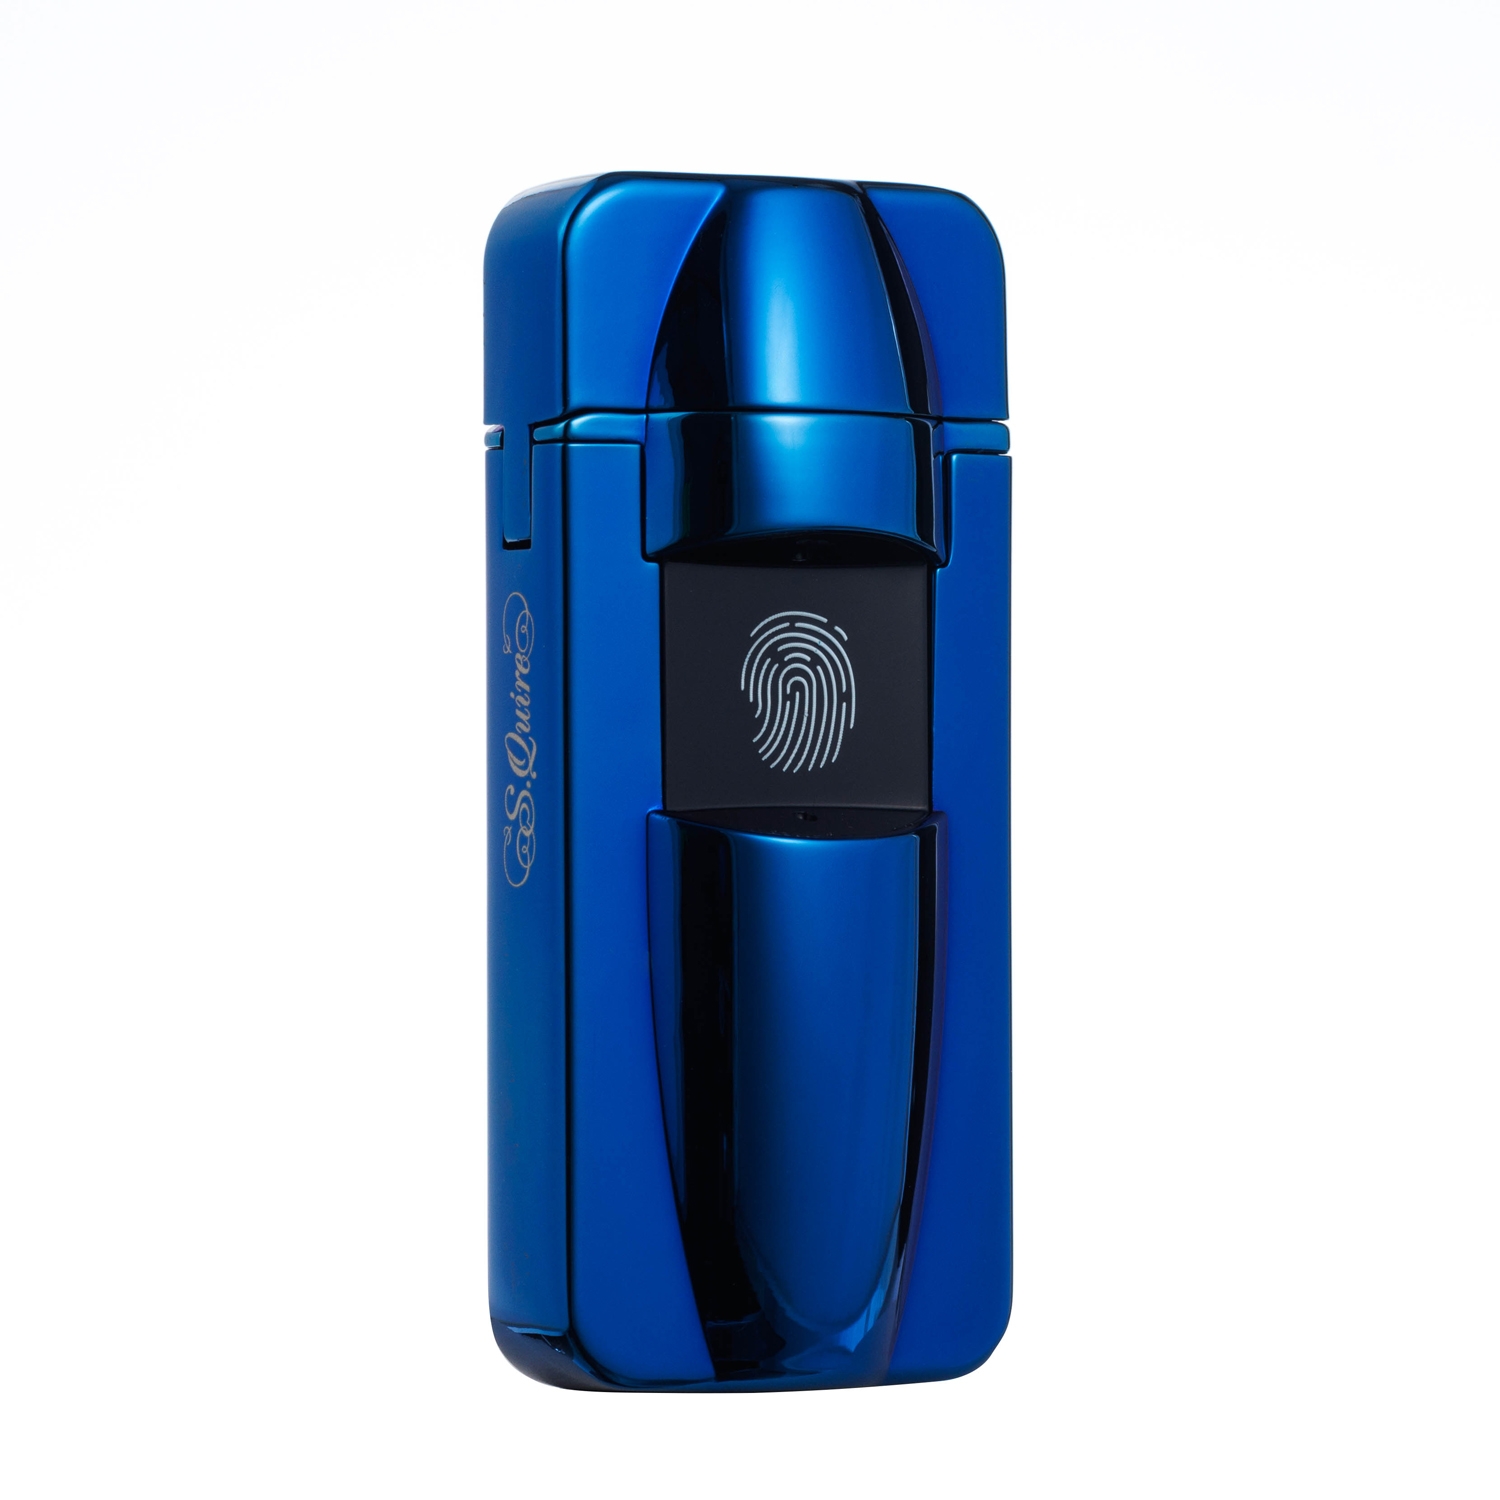 Зажигалка S.Quire USB, сенсорная, синяя, глянцевая, синий